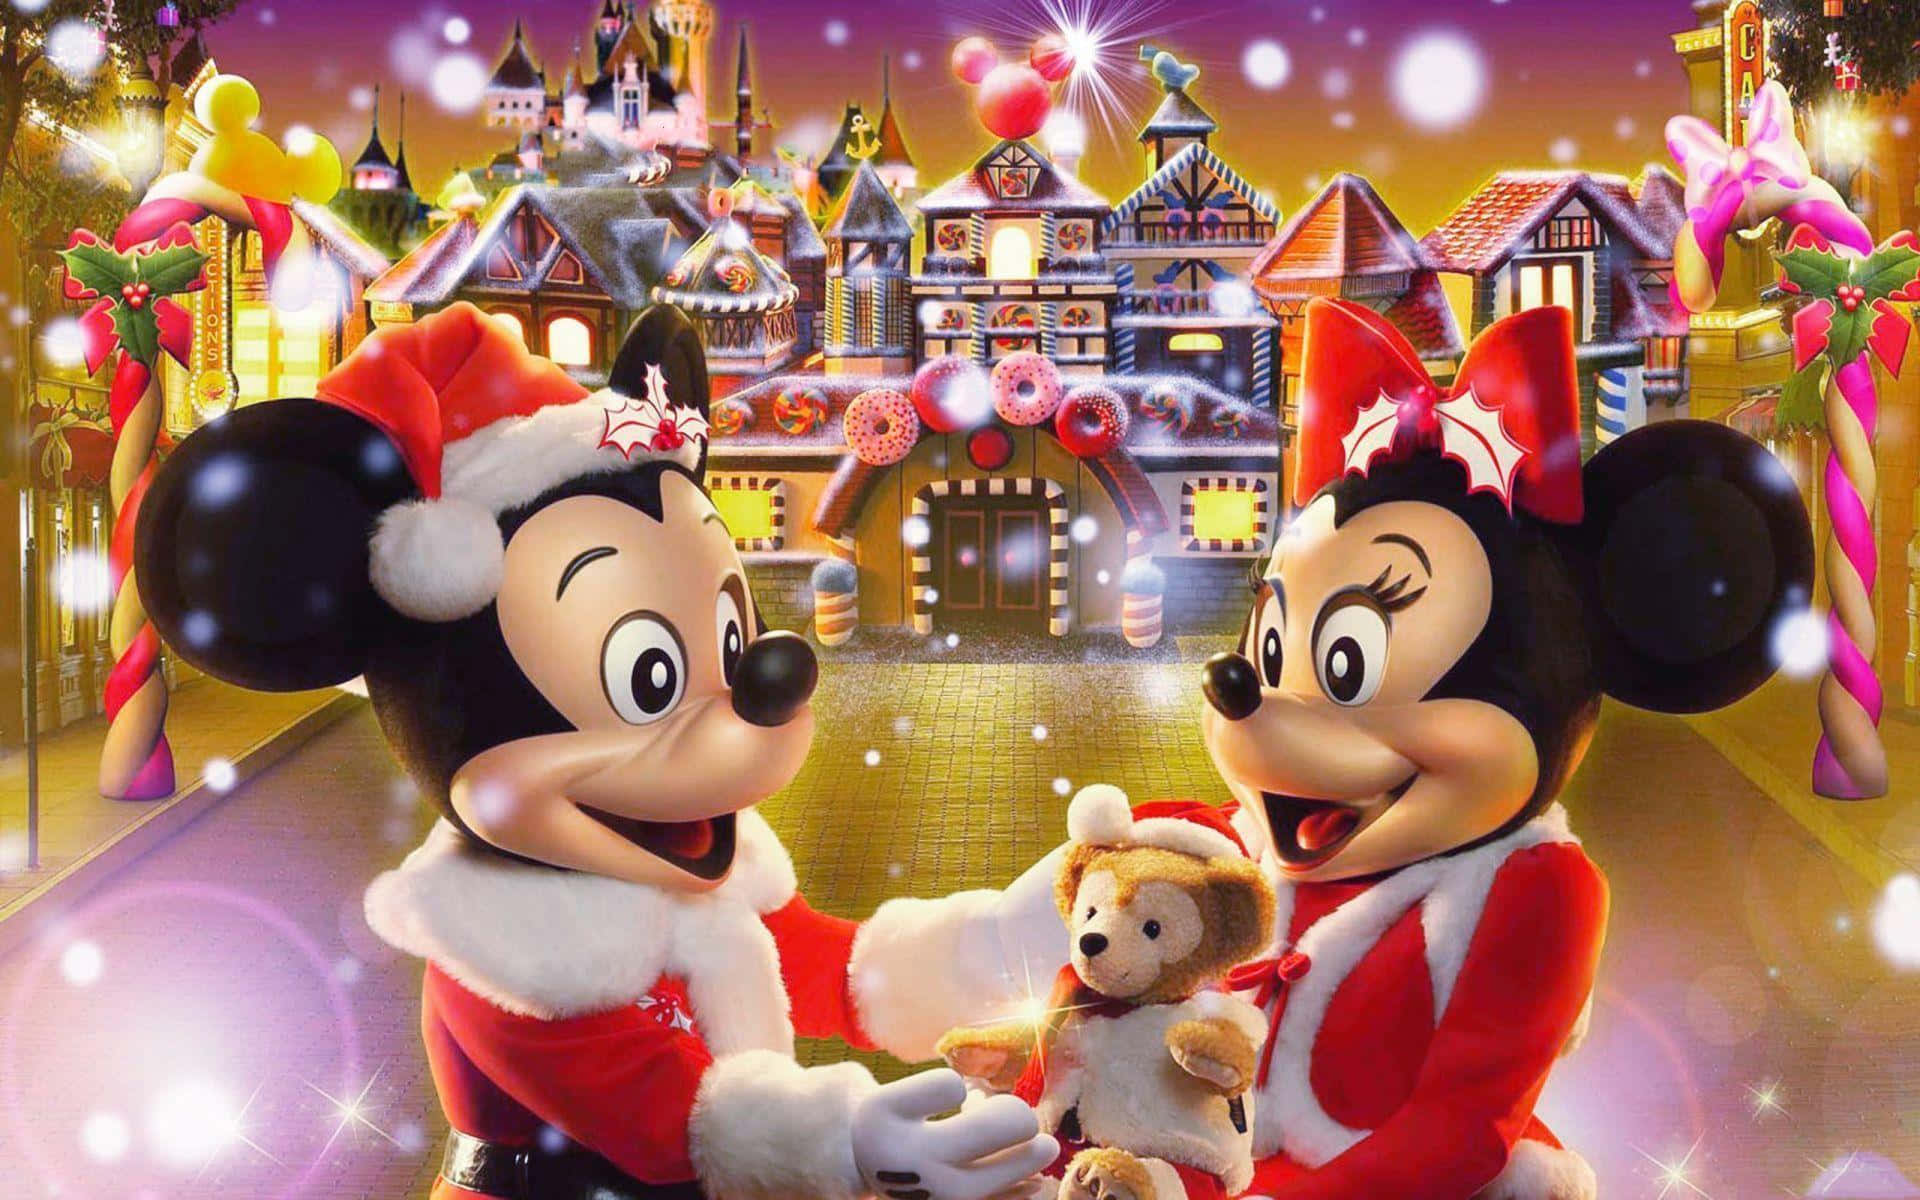 Magical Disney Christmas Celebration